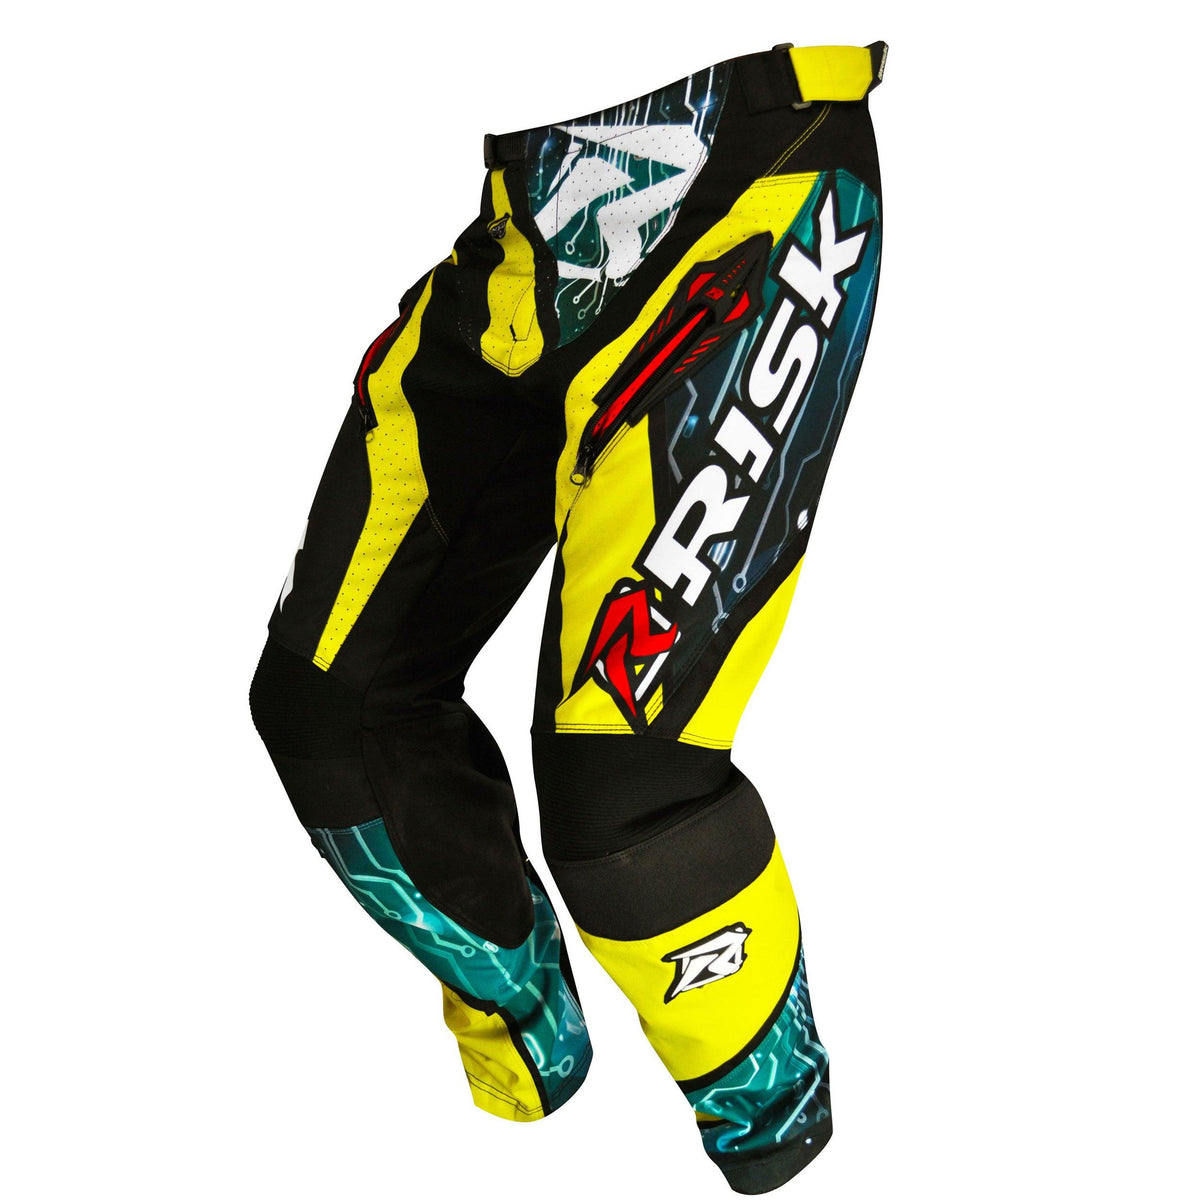 LEATT Husqvarna Motocross Gear Kit Jersey/Pants Combo MX ATV Racing Set |  eBay